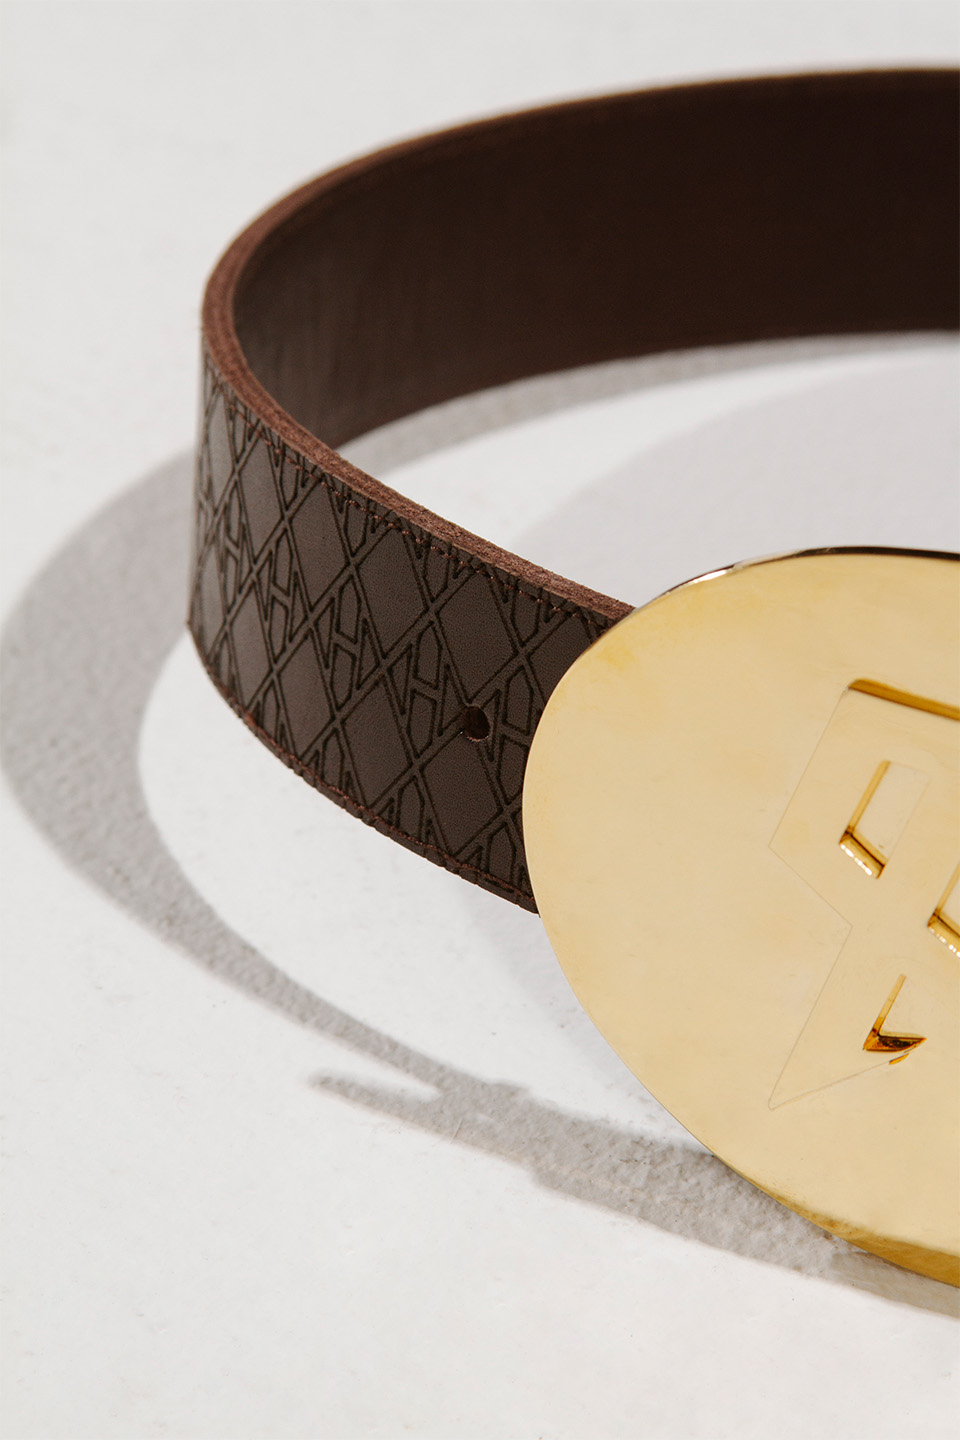 Canelo Alvarez's co-designed leather & 14K gold belt.